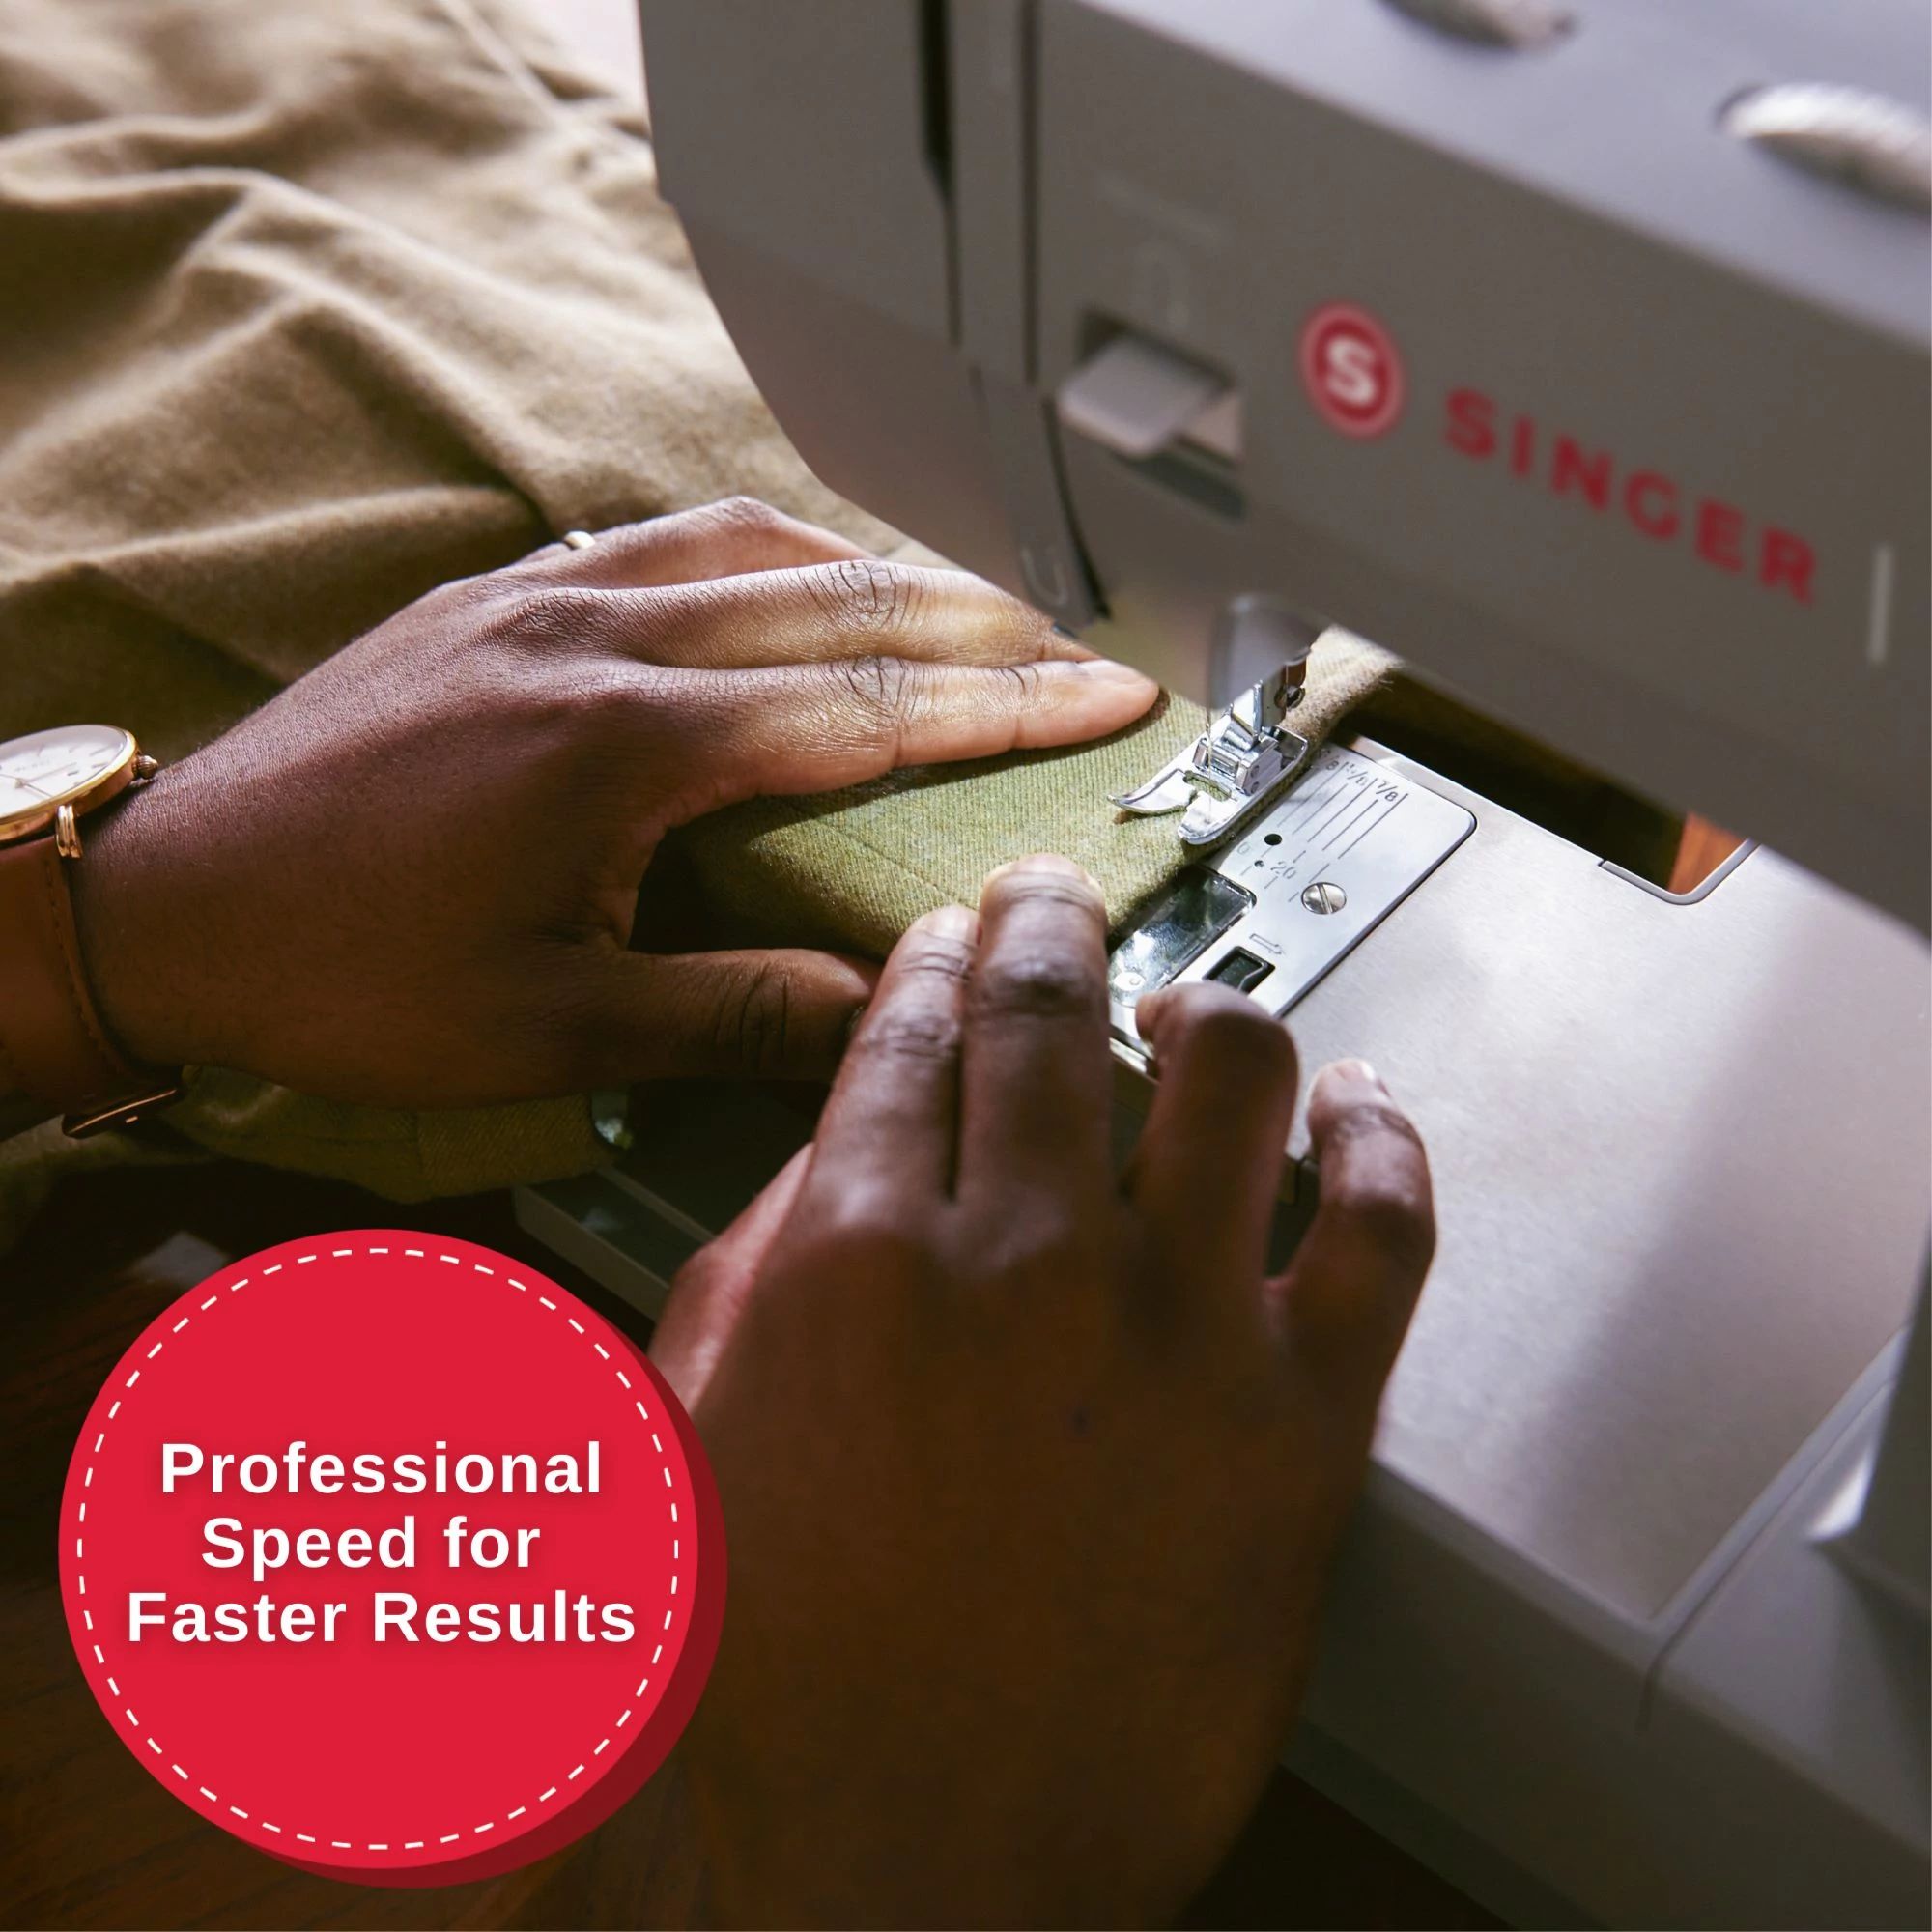 SINGER Heavy Duty 4411 Sewing Machine –